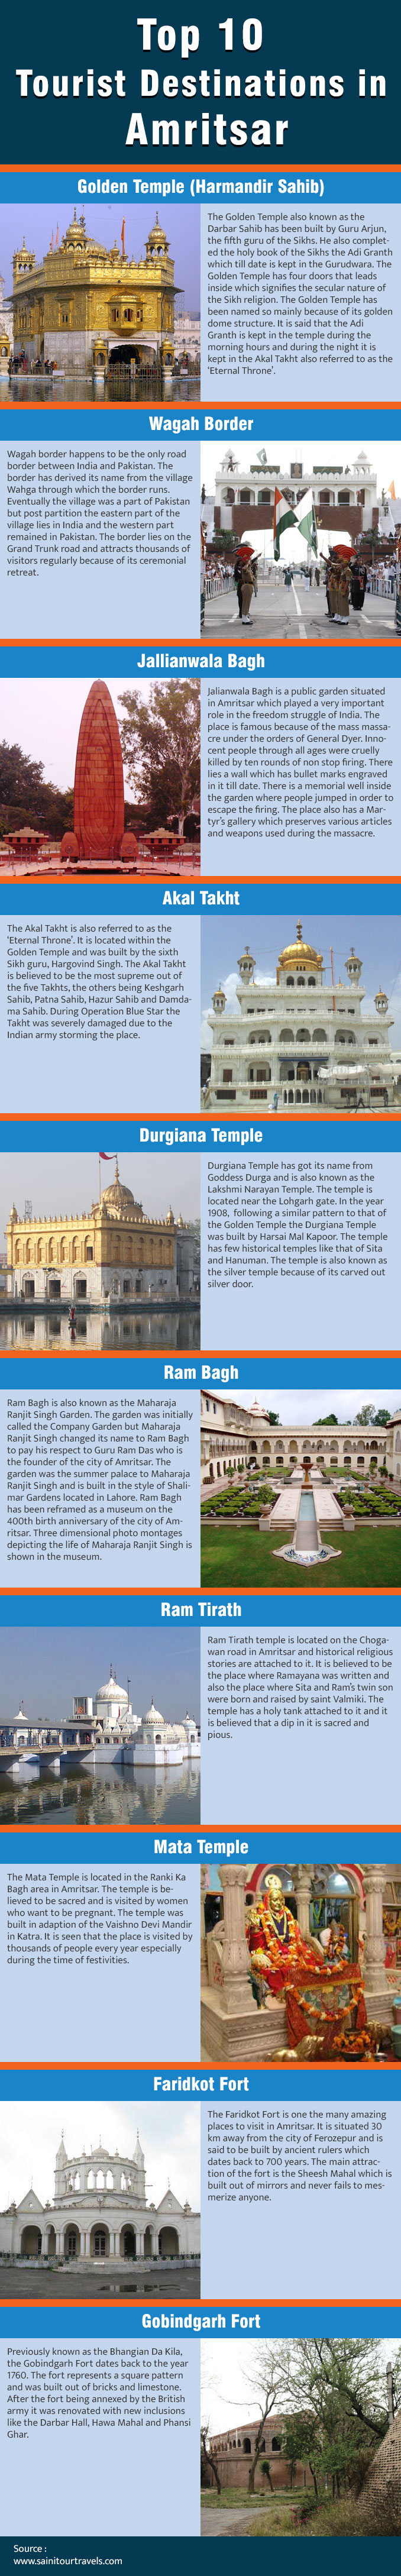 Top 10 Tourist Destinations in Amritsar